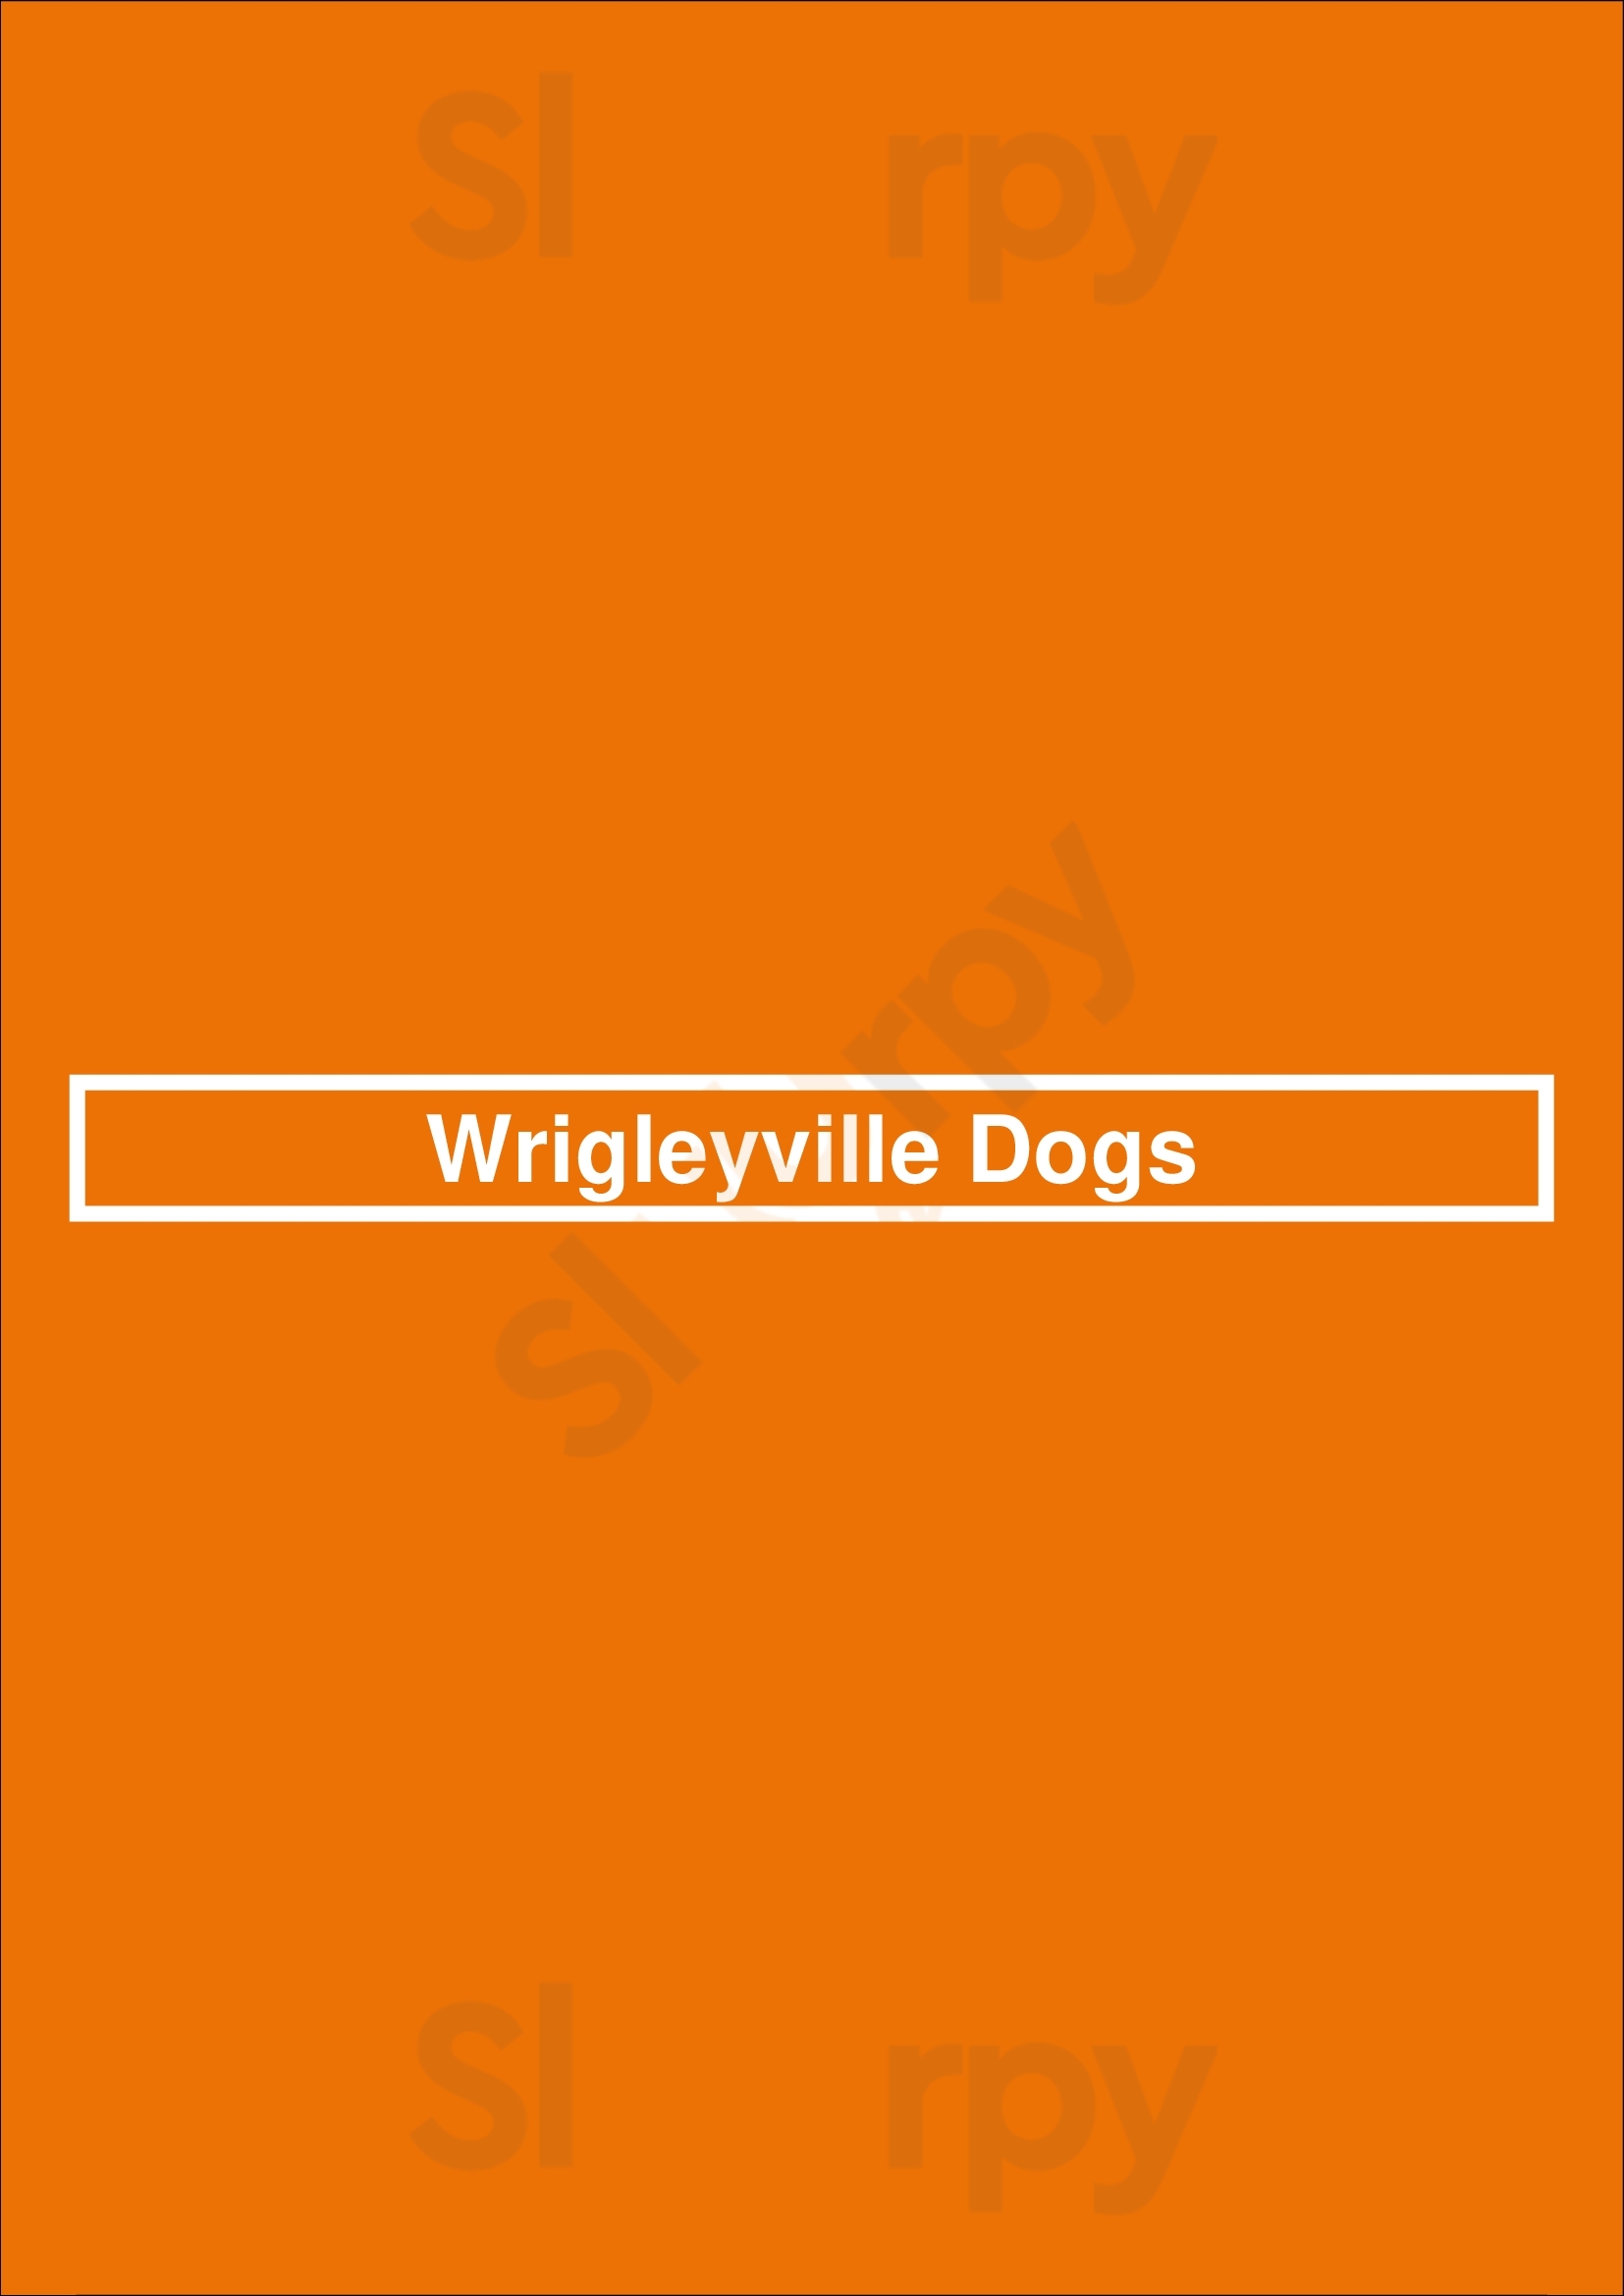 Wrigleyville Dogs Chicago Menu - 1